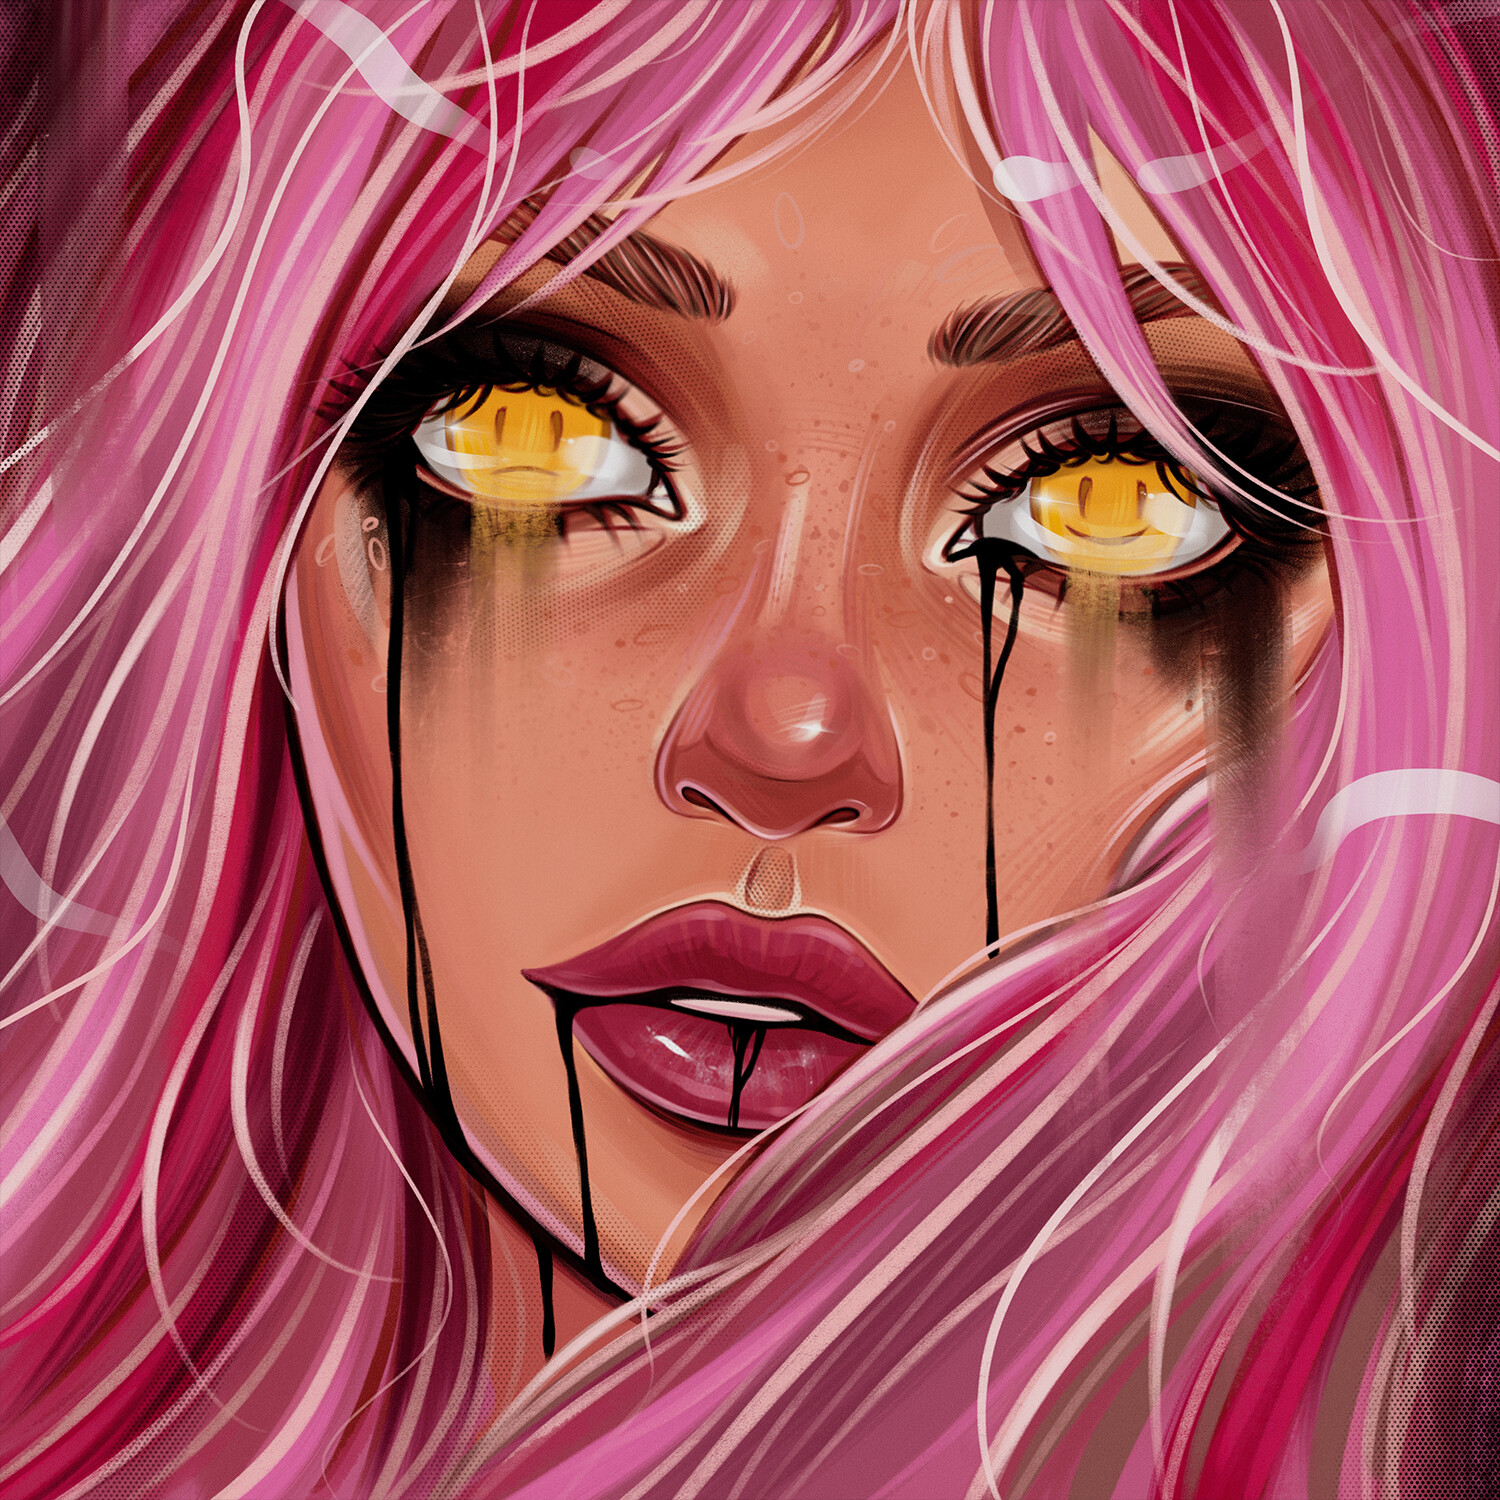 ArtStation - art girl with pink hair